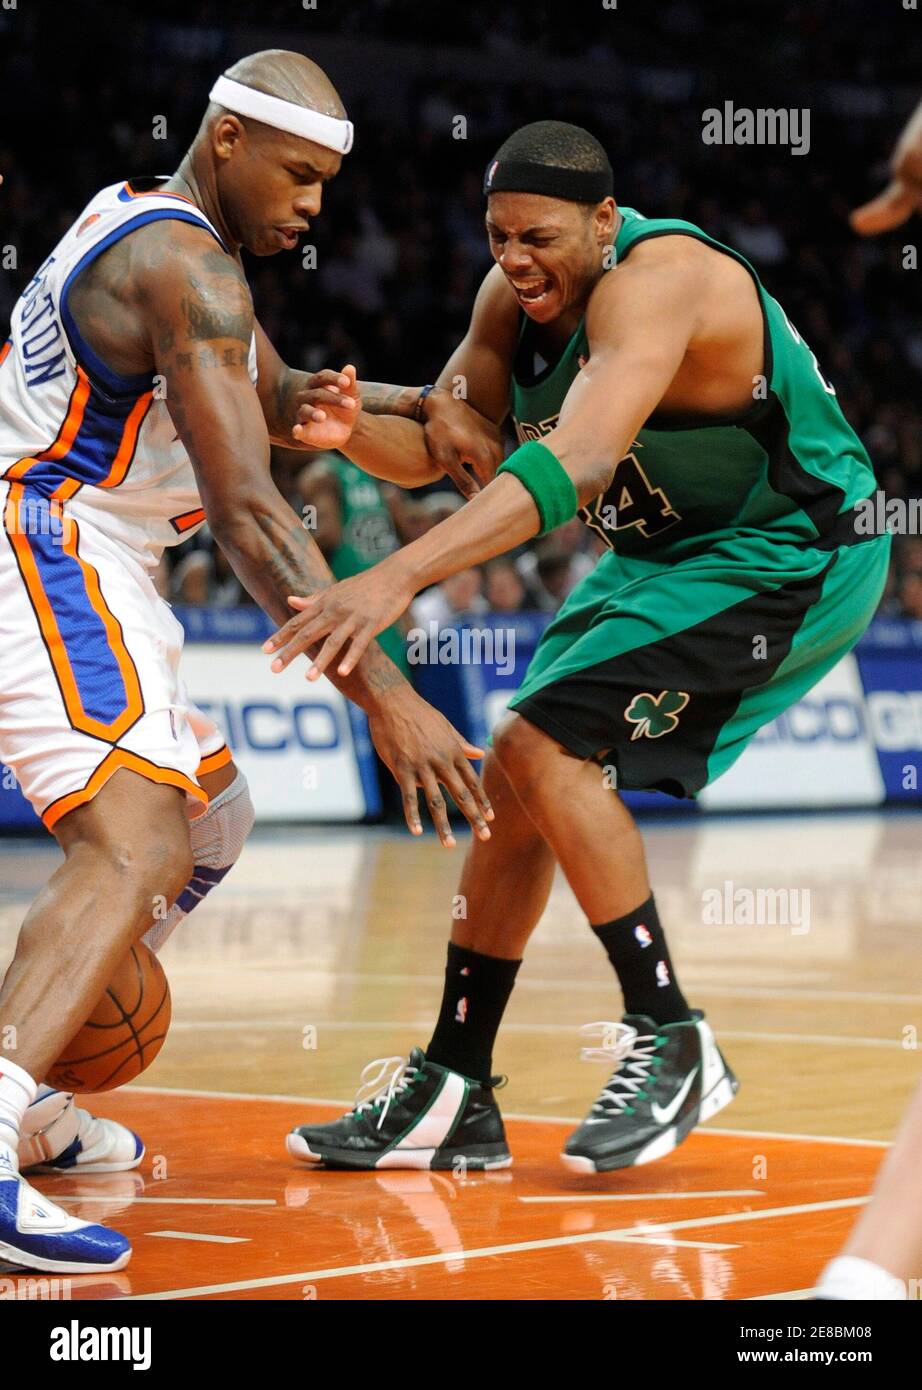 Boston Celtics forward Paul Pierce (R) reacts as New York Knicks forward Al  Harrington knocks the ball loose in the fourth quarter of their NBA  basketball game at Madison Square Garden in